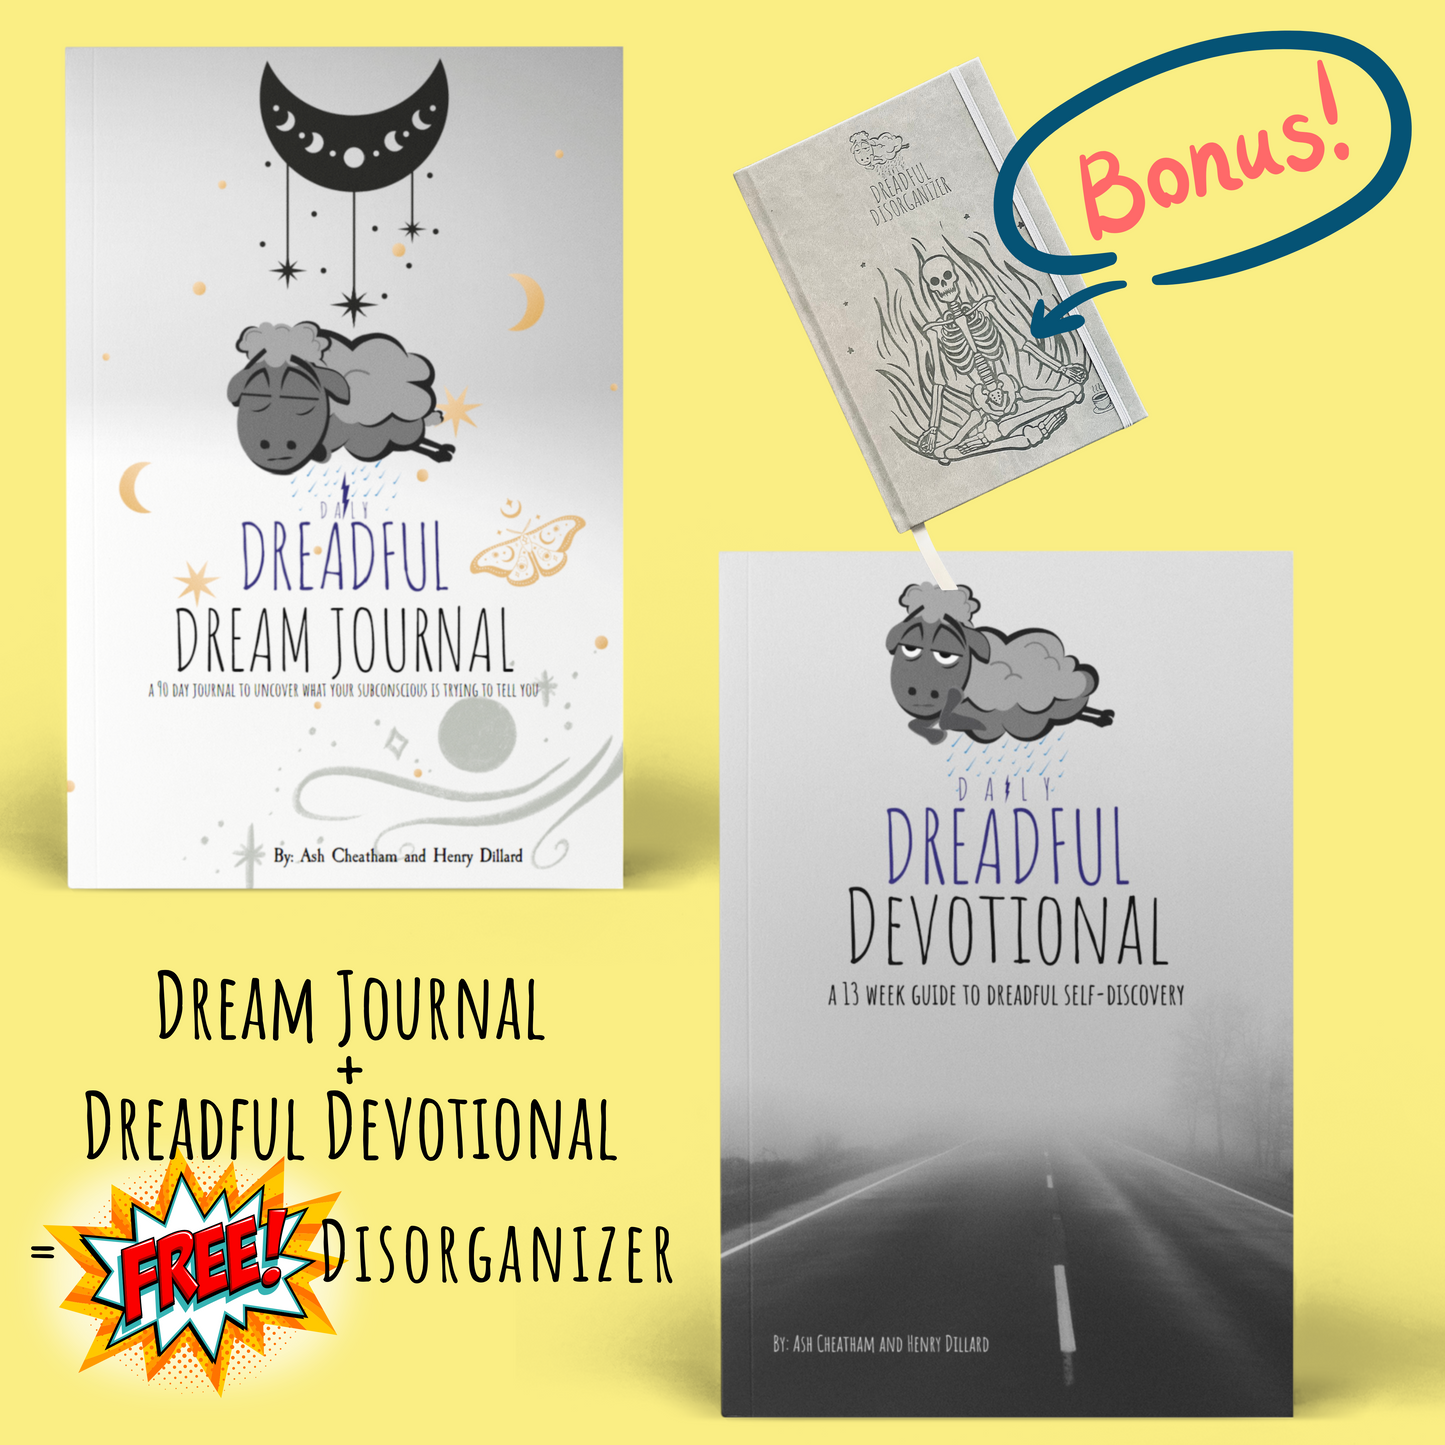 Dreadful Bundle -Buy the Dream Journal & Devotional get Disorganizer FREE